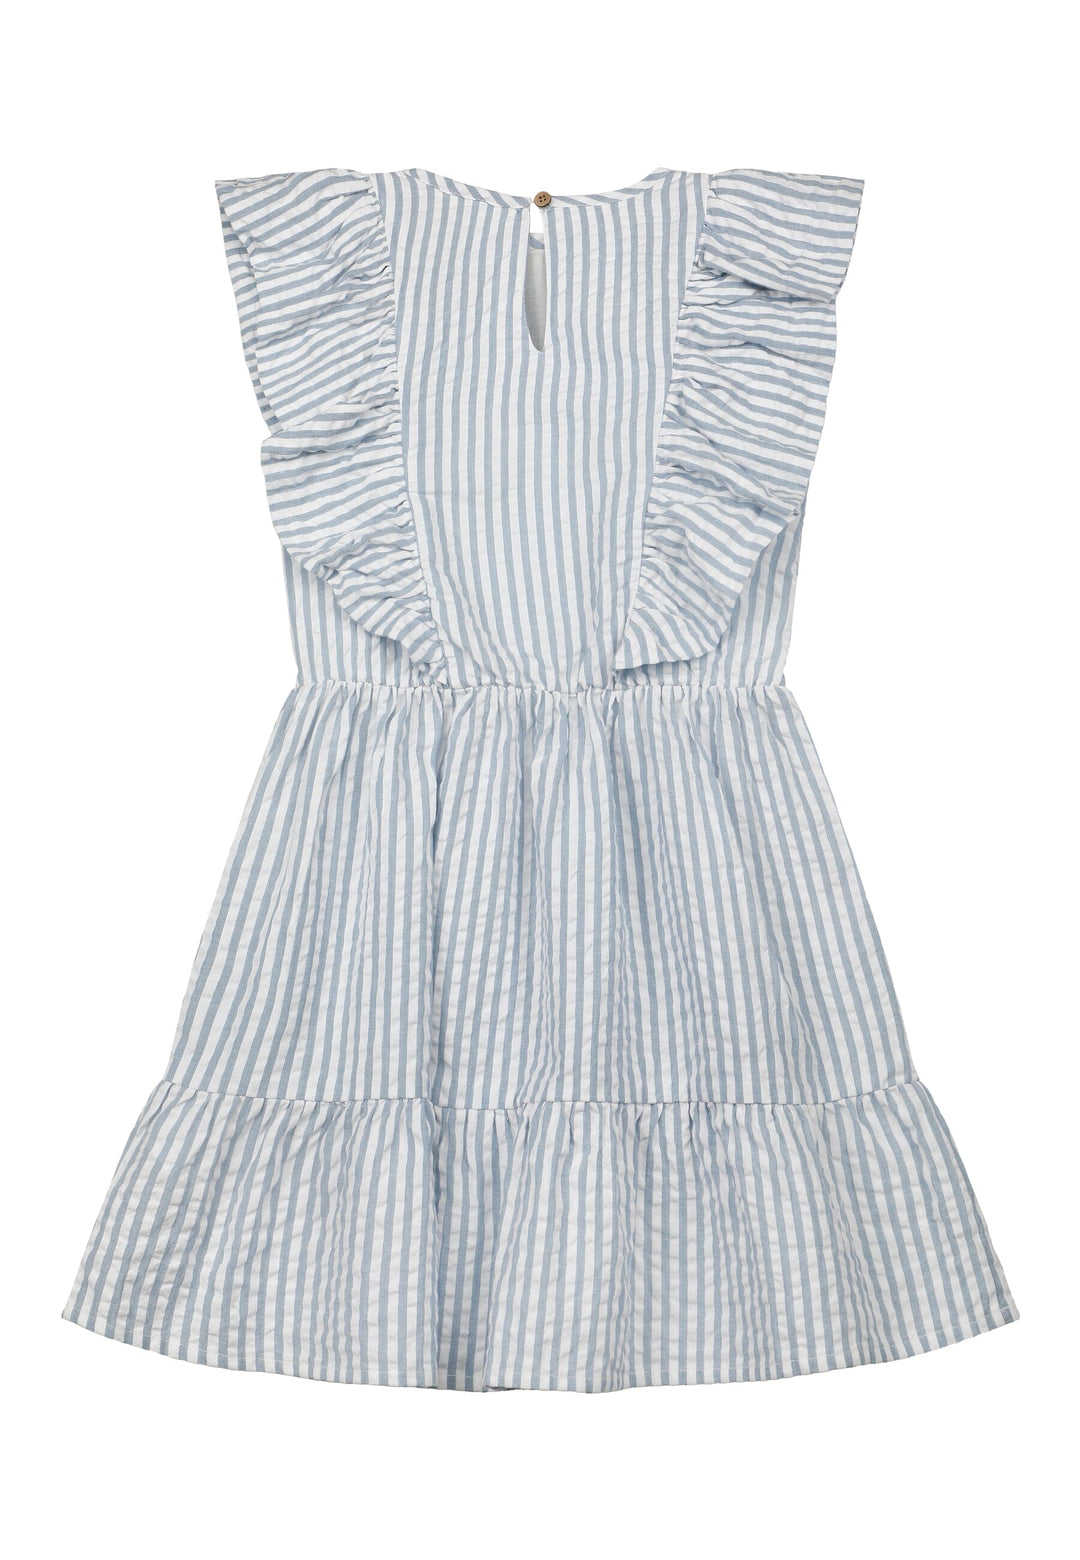 The New - Tnkai S_ L Dress - Blue Fog Kjoler 